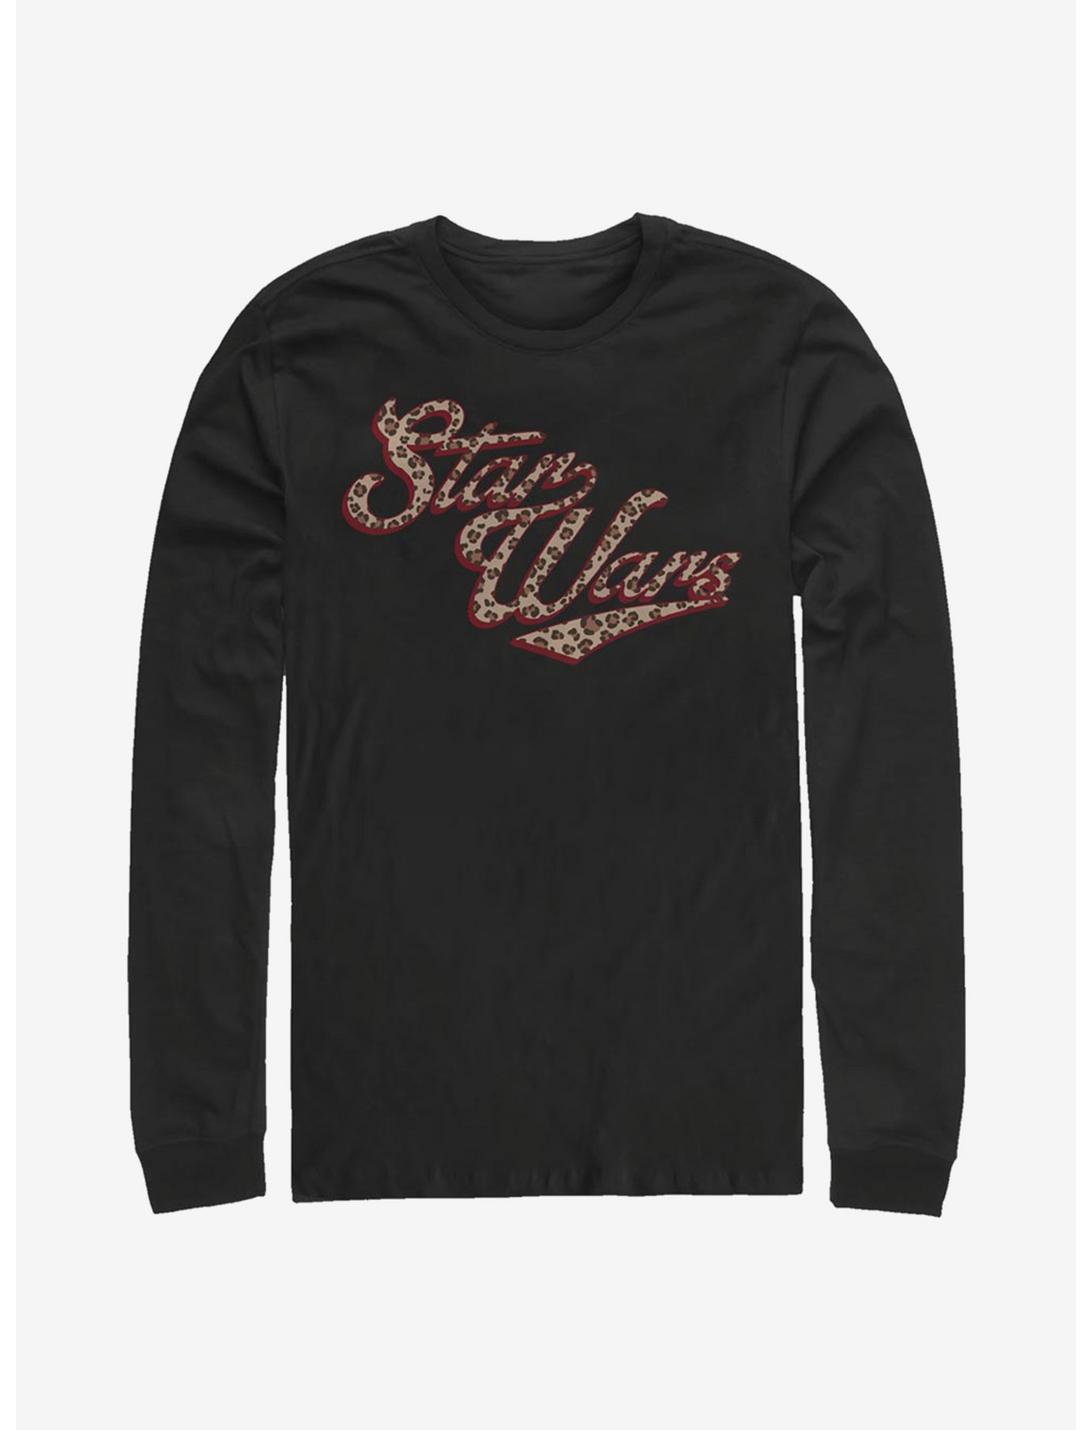 Star Wars Cheetah Long-Sleeve T-Shirt, BLACK, hi-res